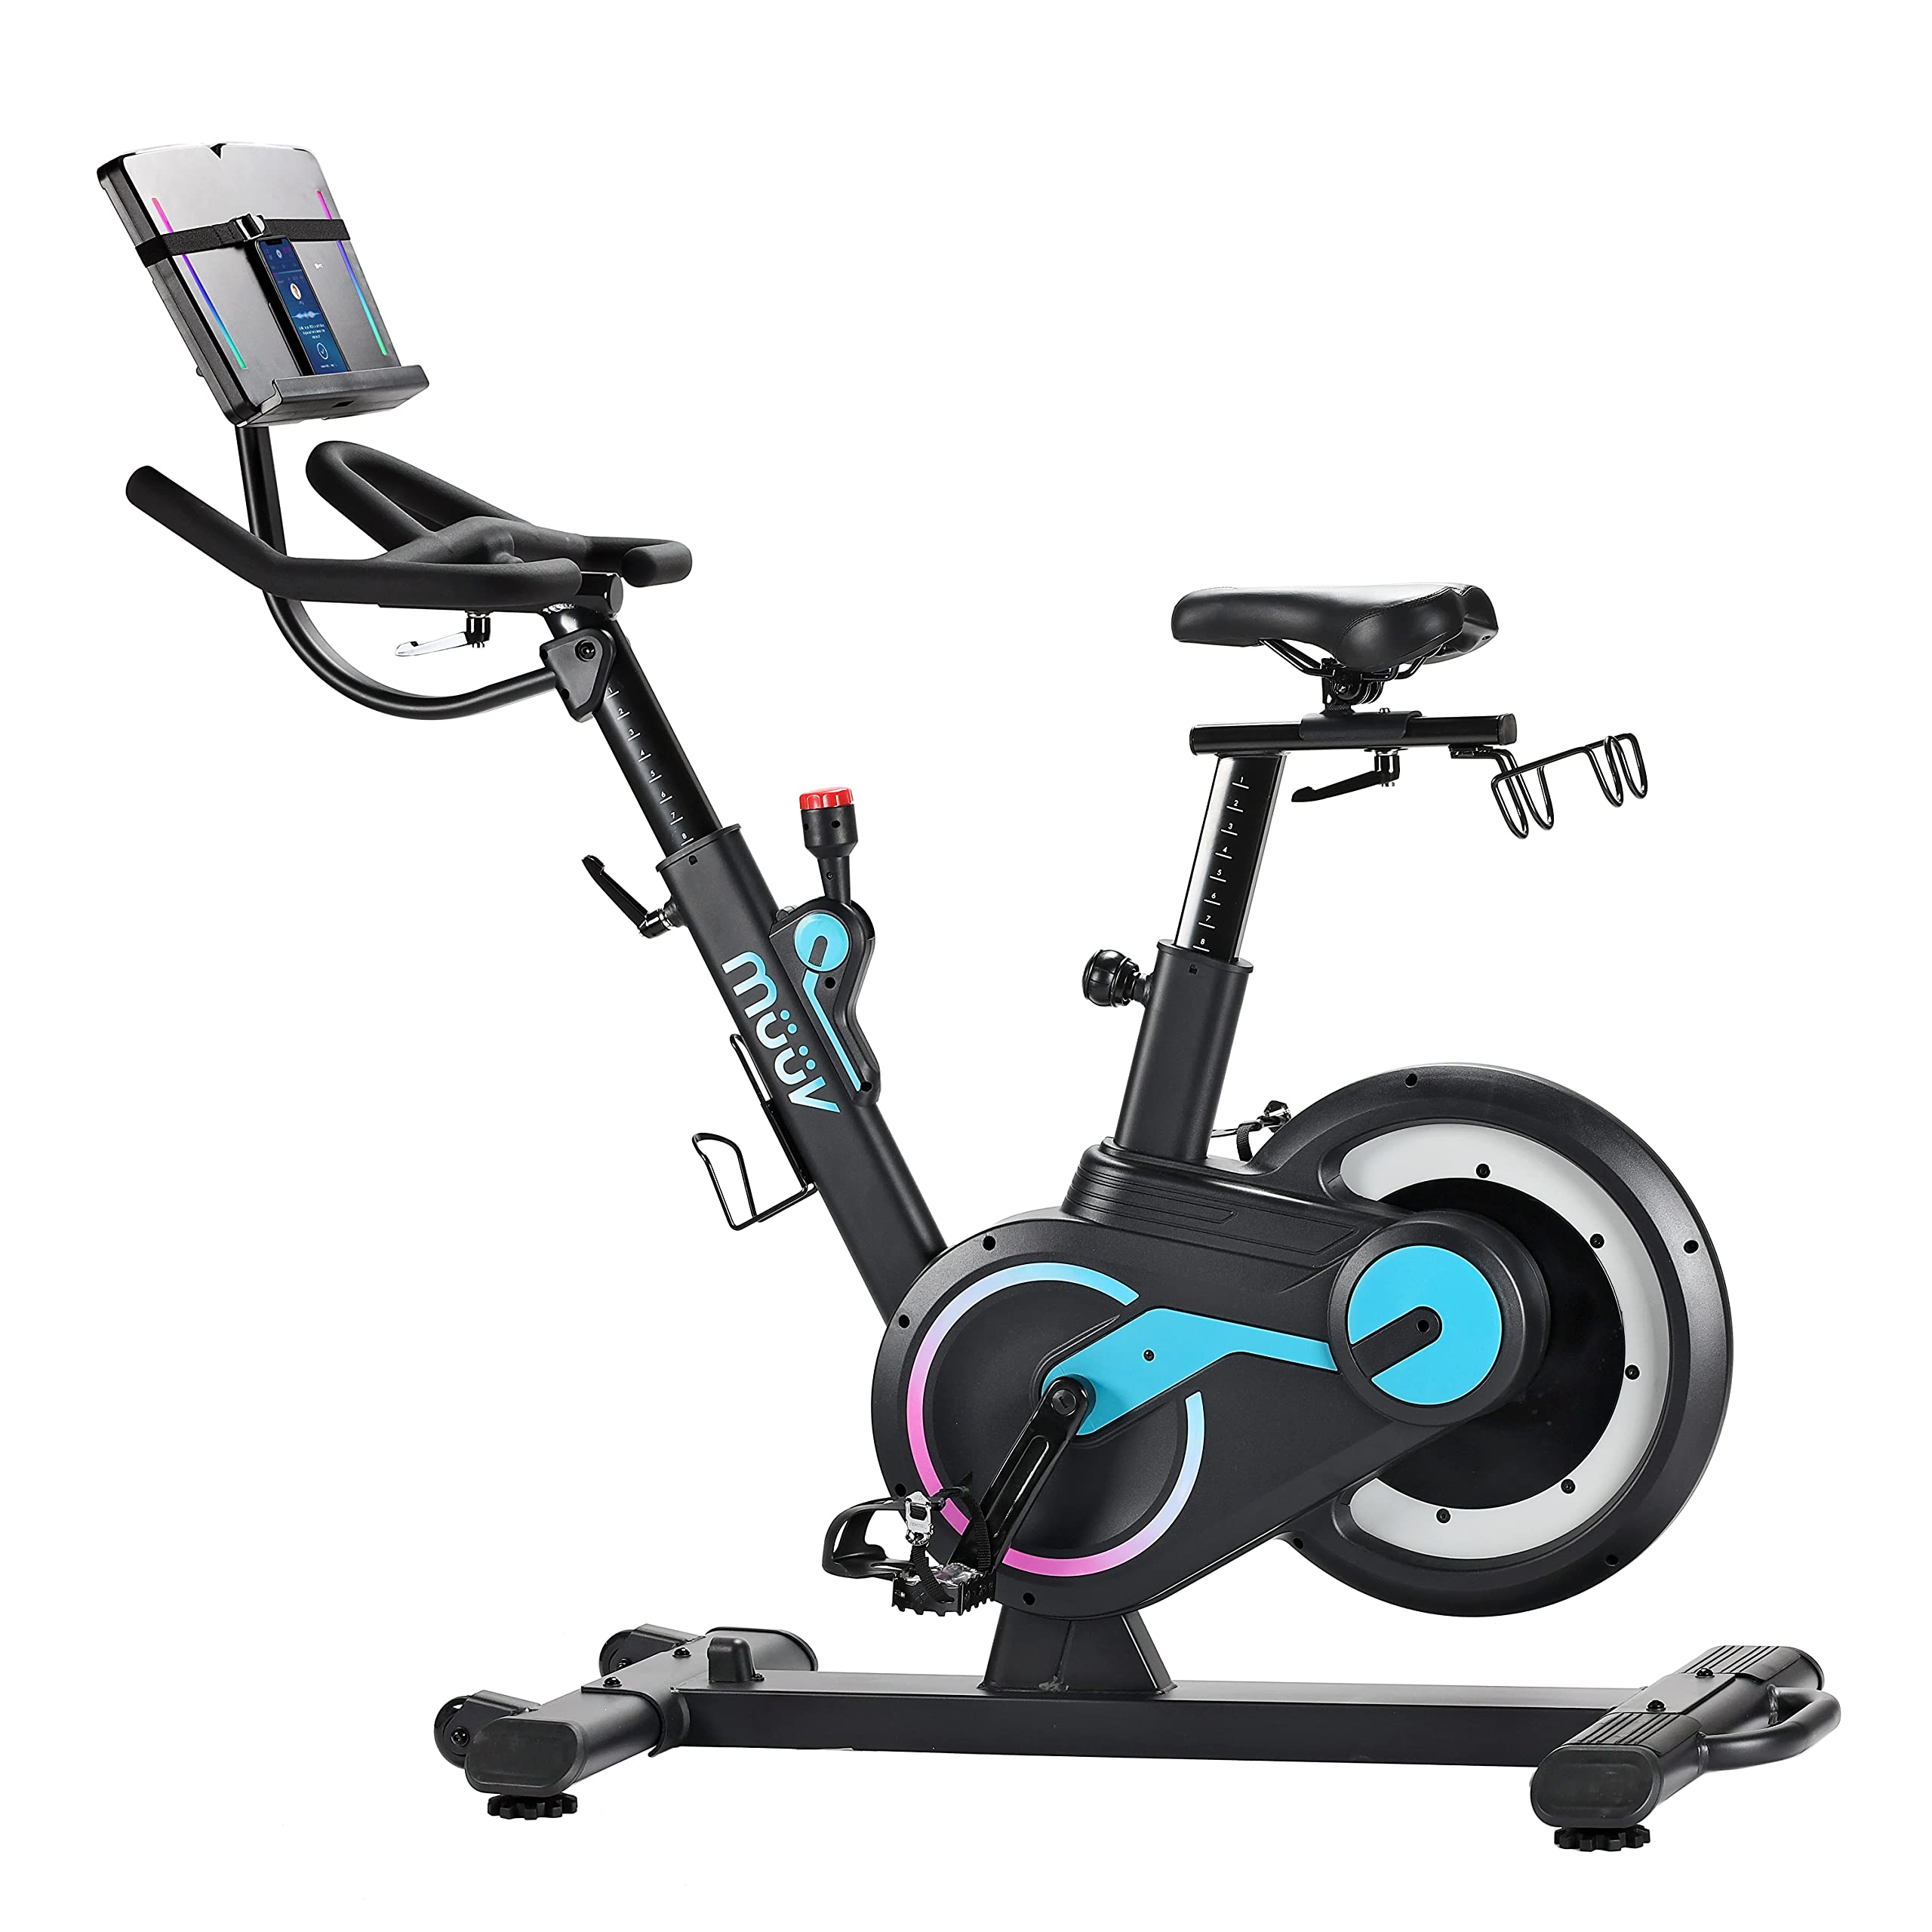 Stamina muuv Bike  Smart, connected Exercise Bike  Wireless Bluetooth Smart Mount  Personalized Audio coaching App